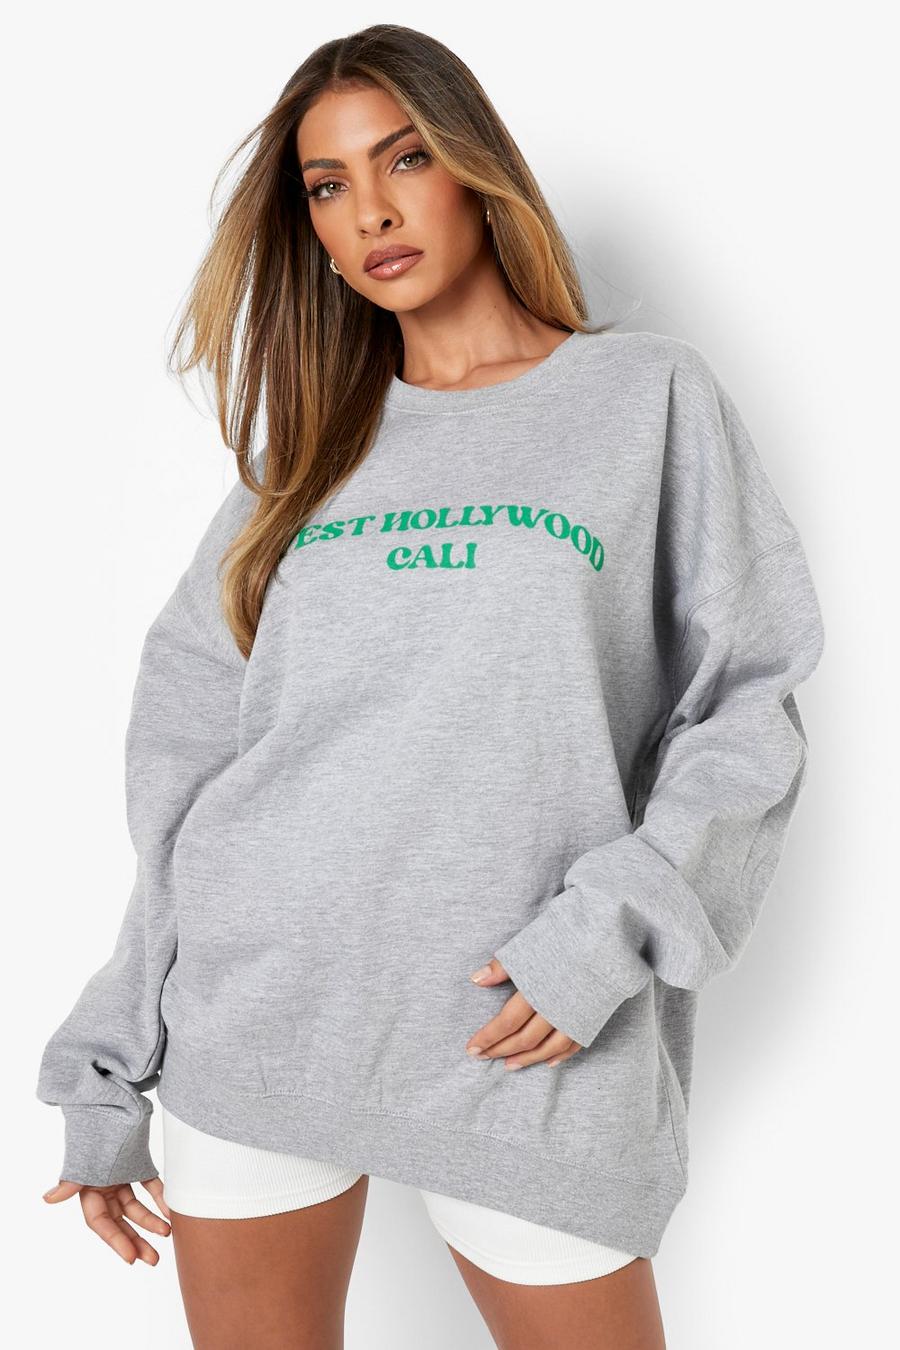 Oversize Sweatshirt mit West Hollywood Print, Grey marl grau